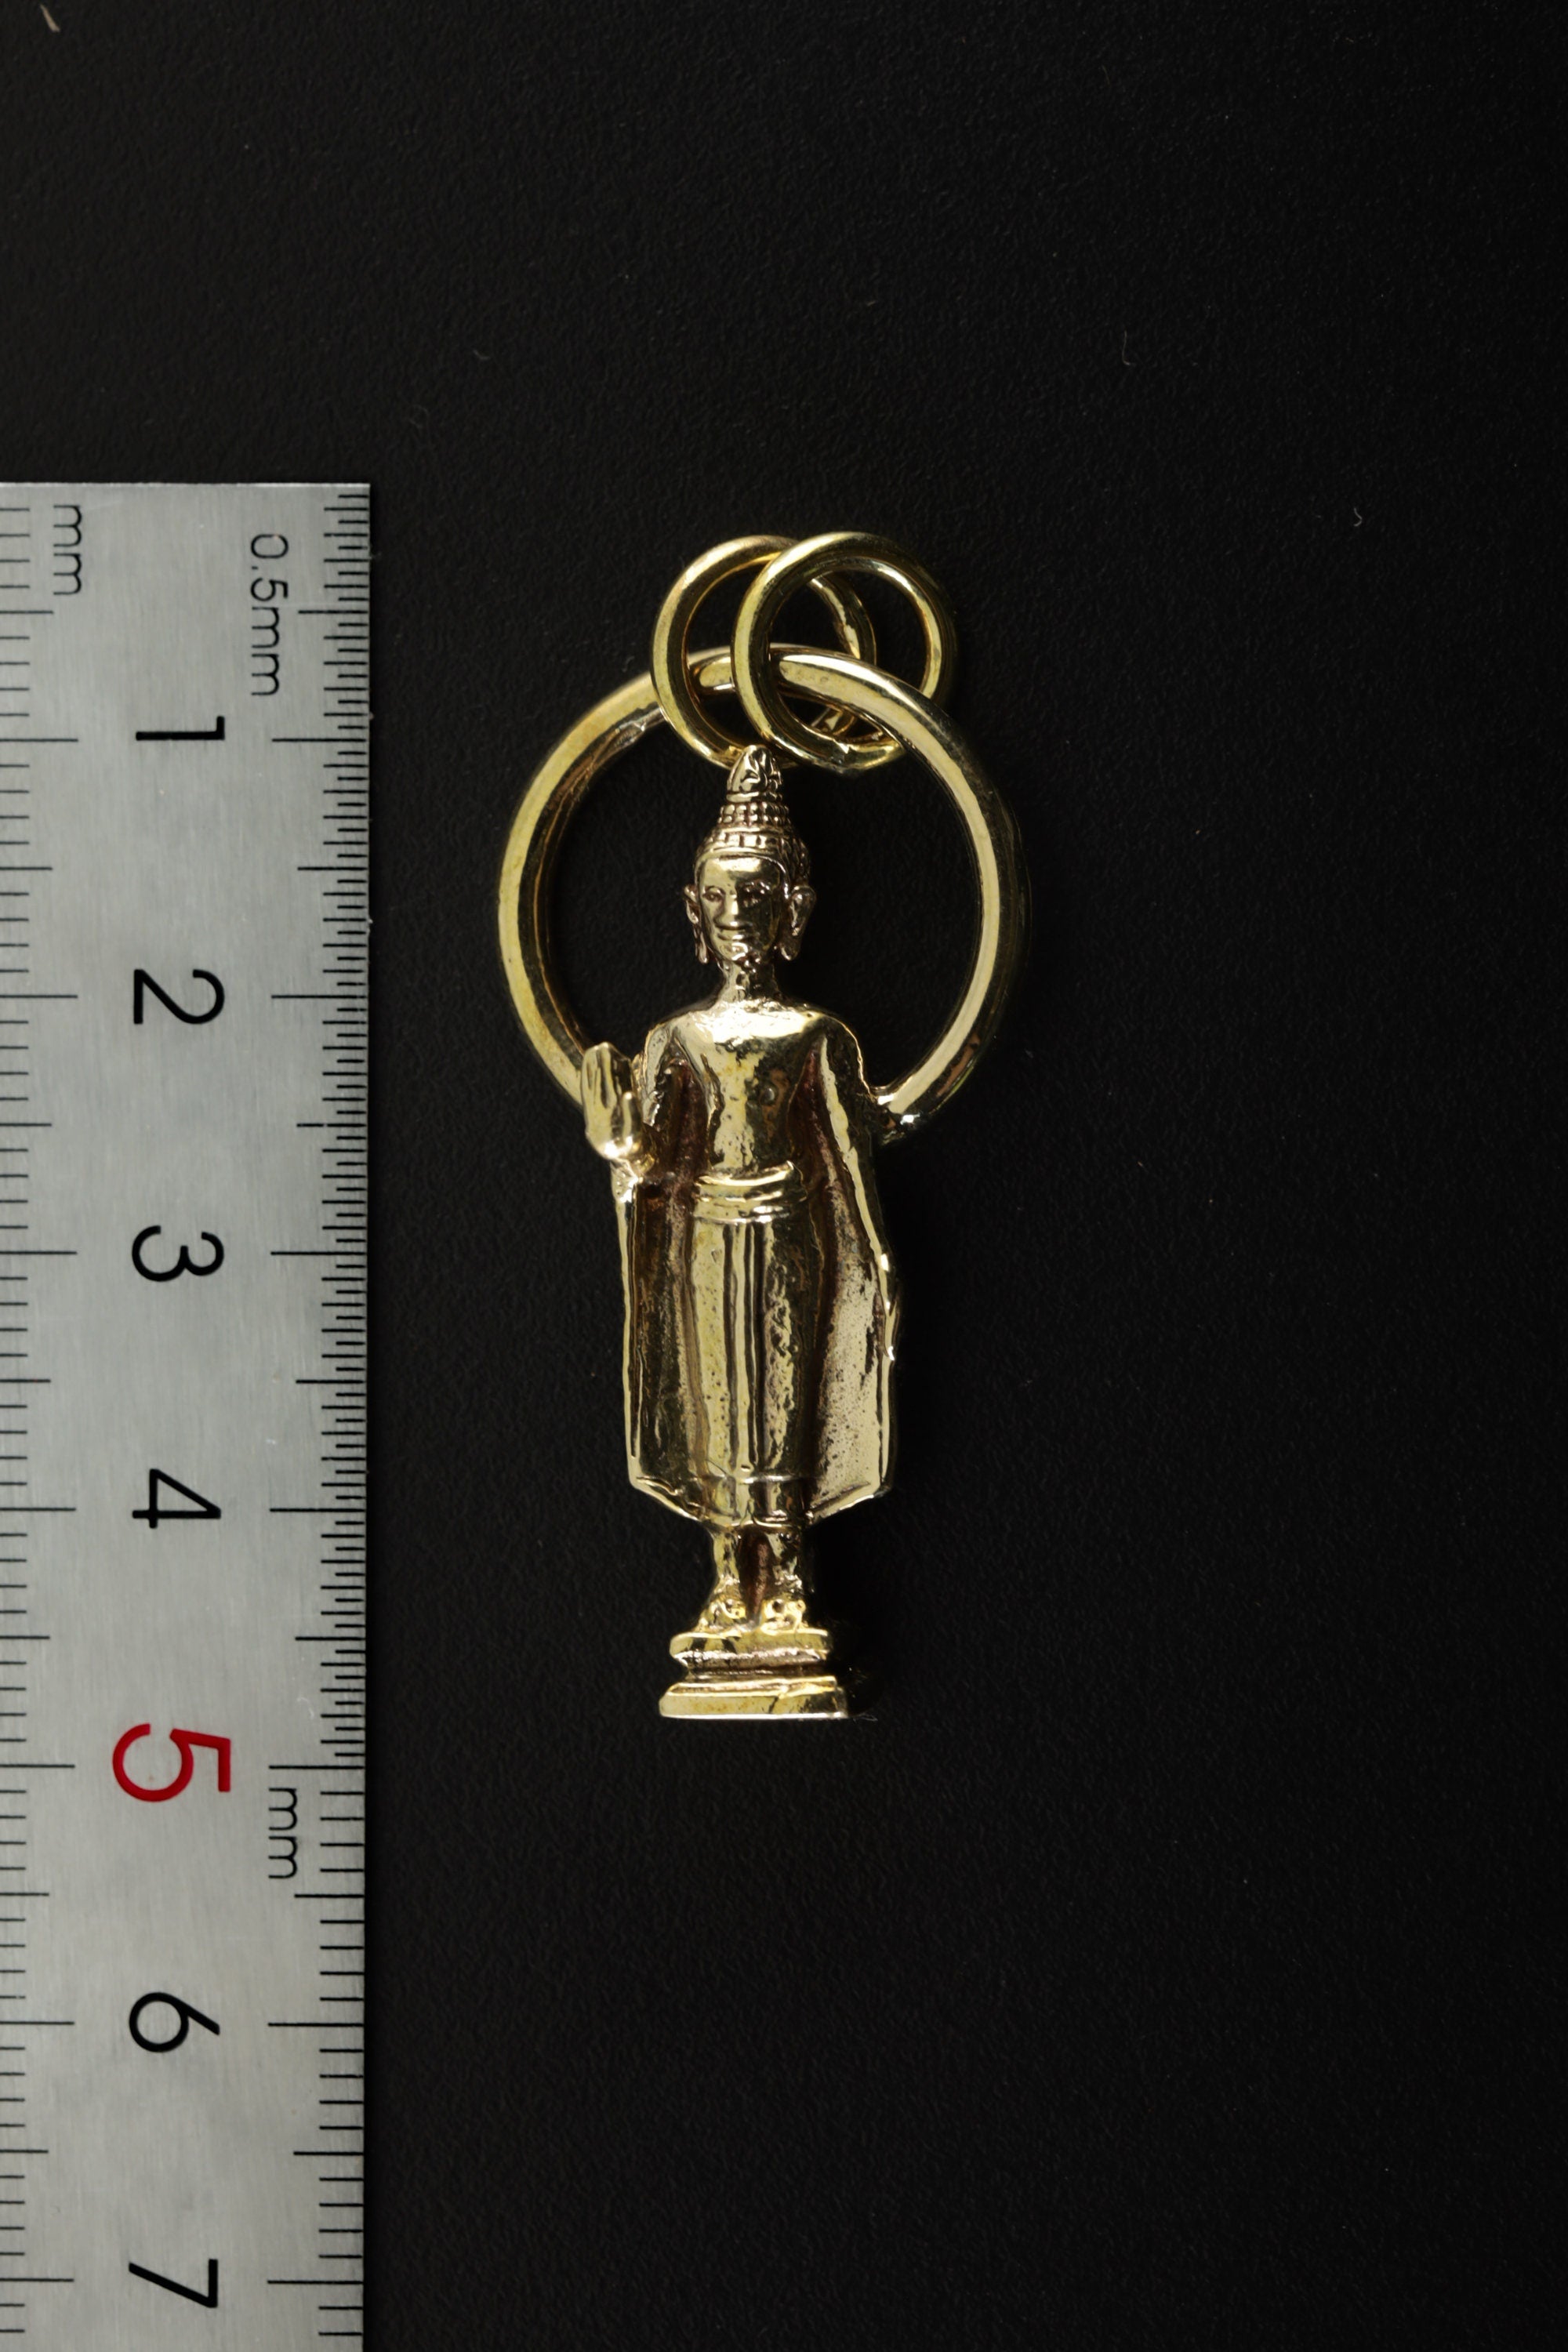 Blessing Aura Verdana Buddha - Gold Plated Brass Cast - Pendant Necklace